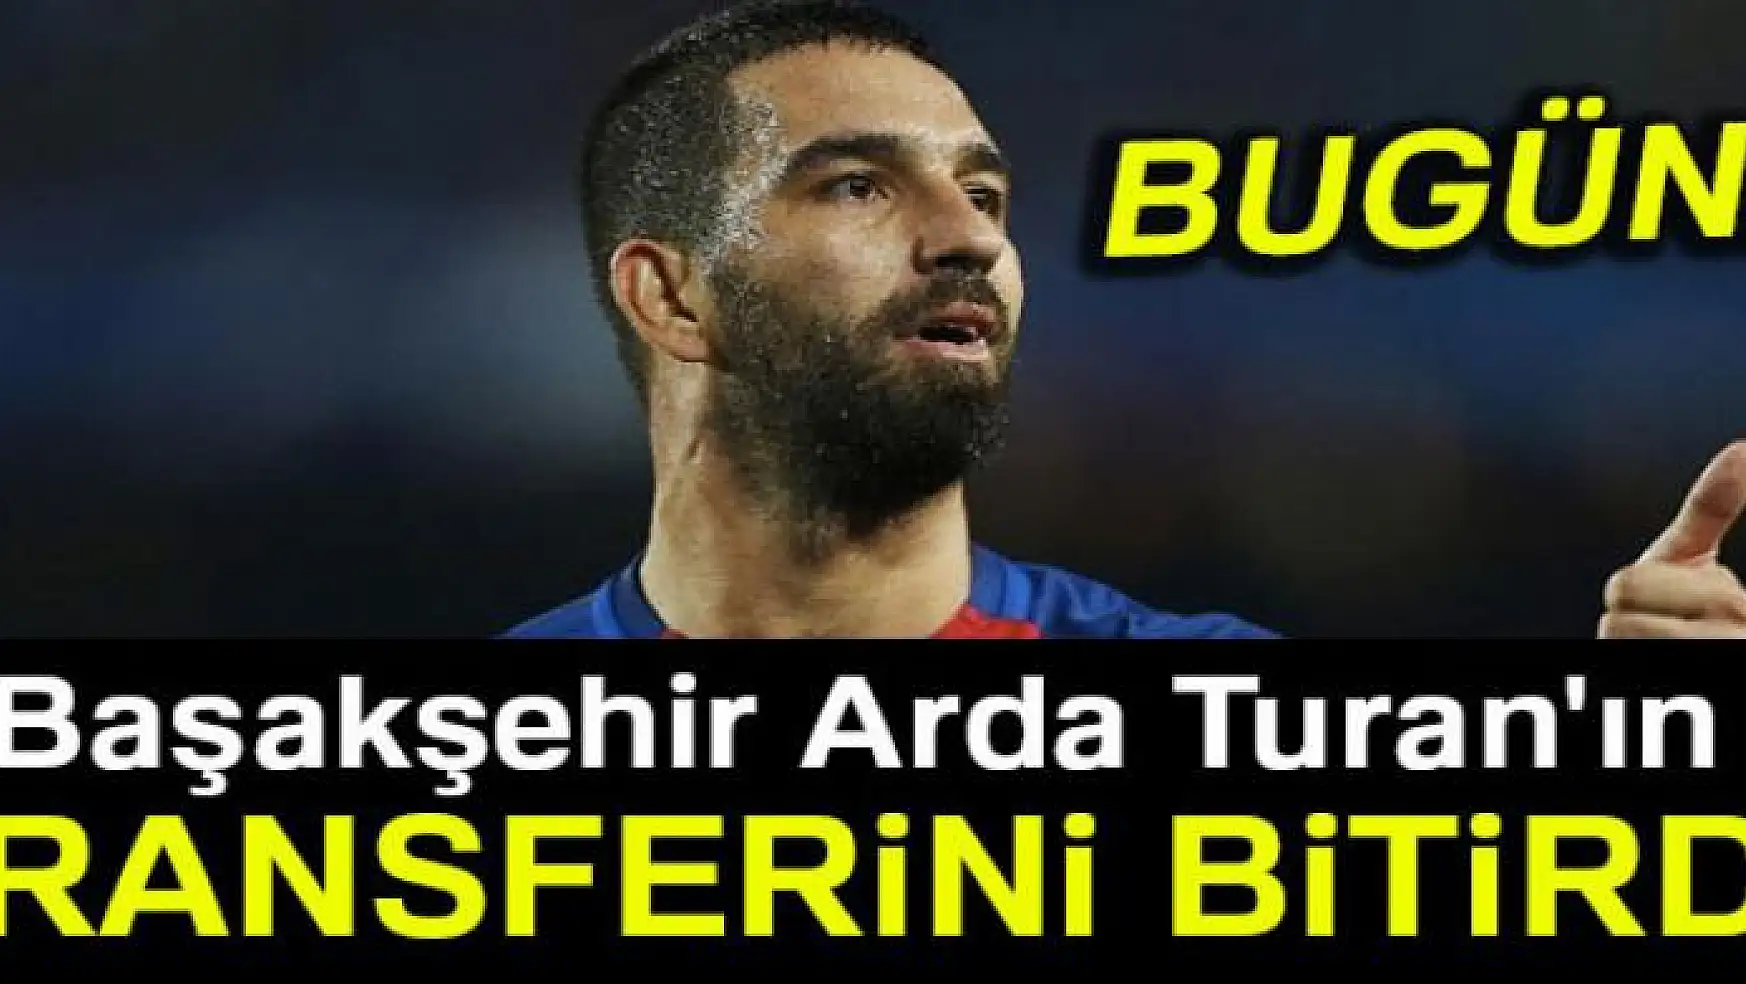 Medipol Başakşehir, Arda Turan'ın transferini bitirdi